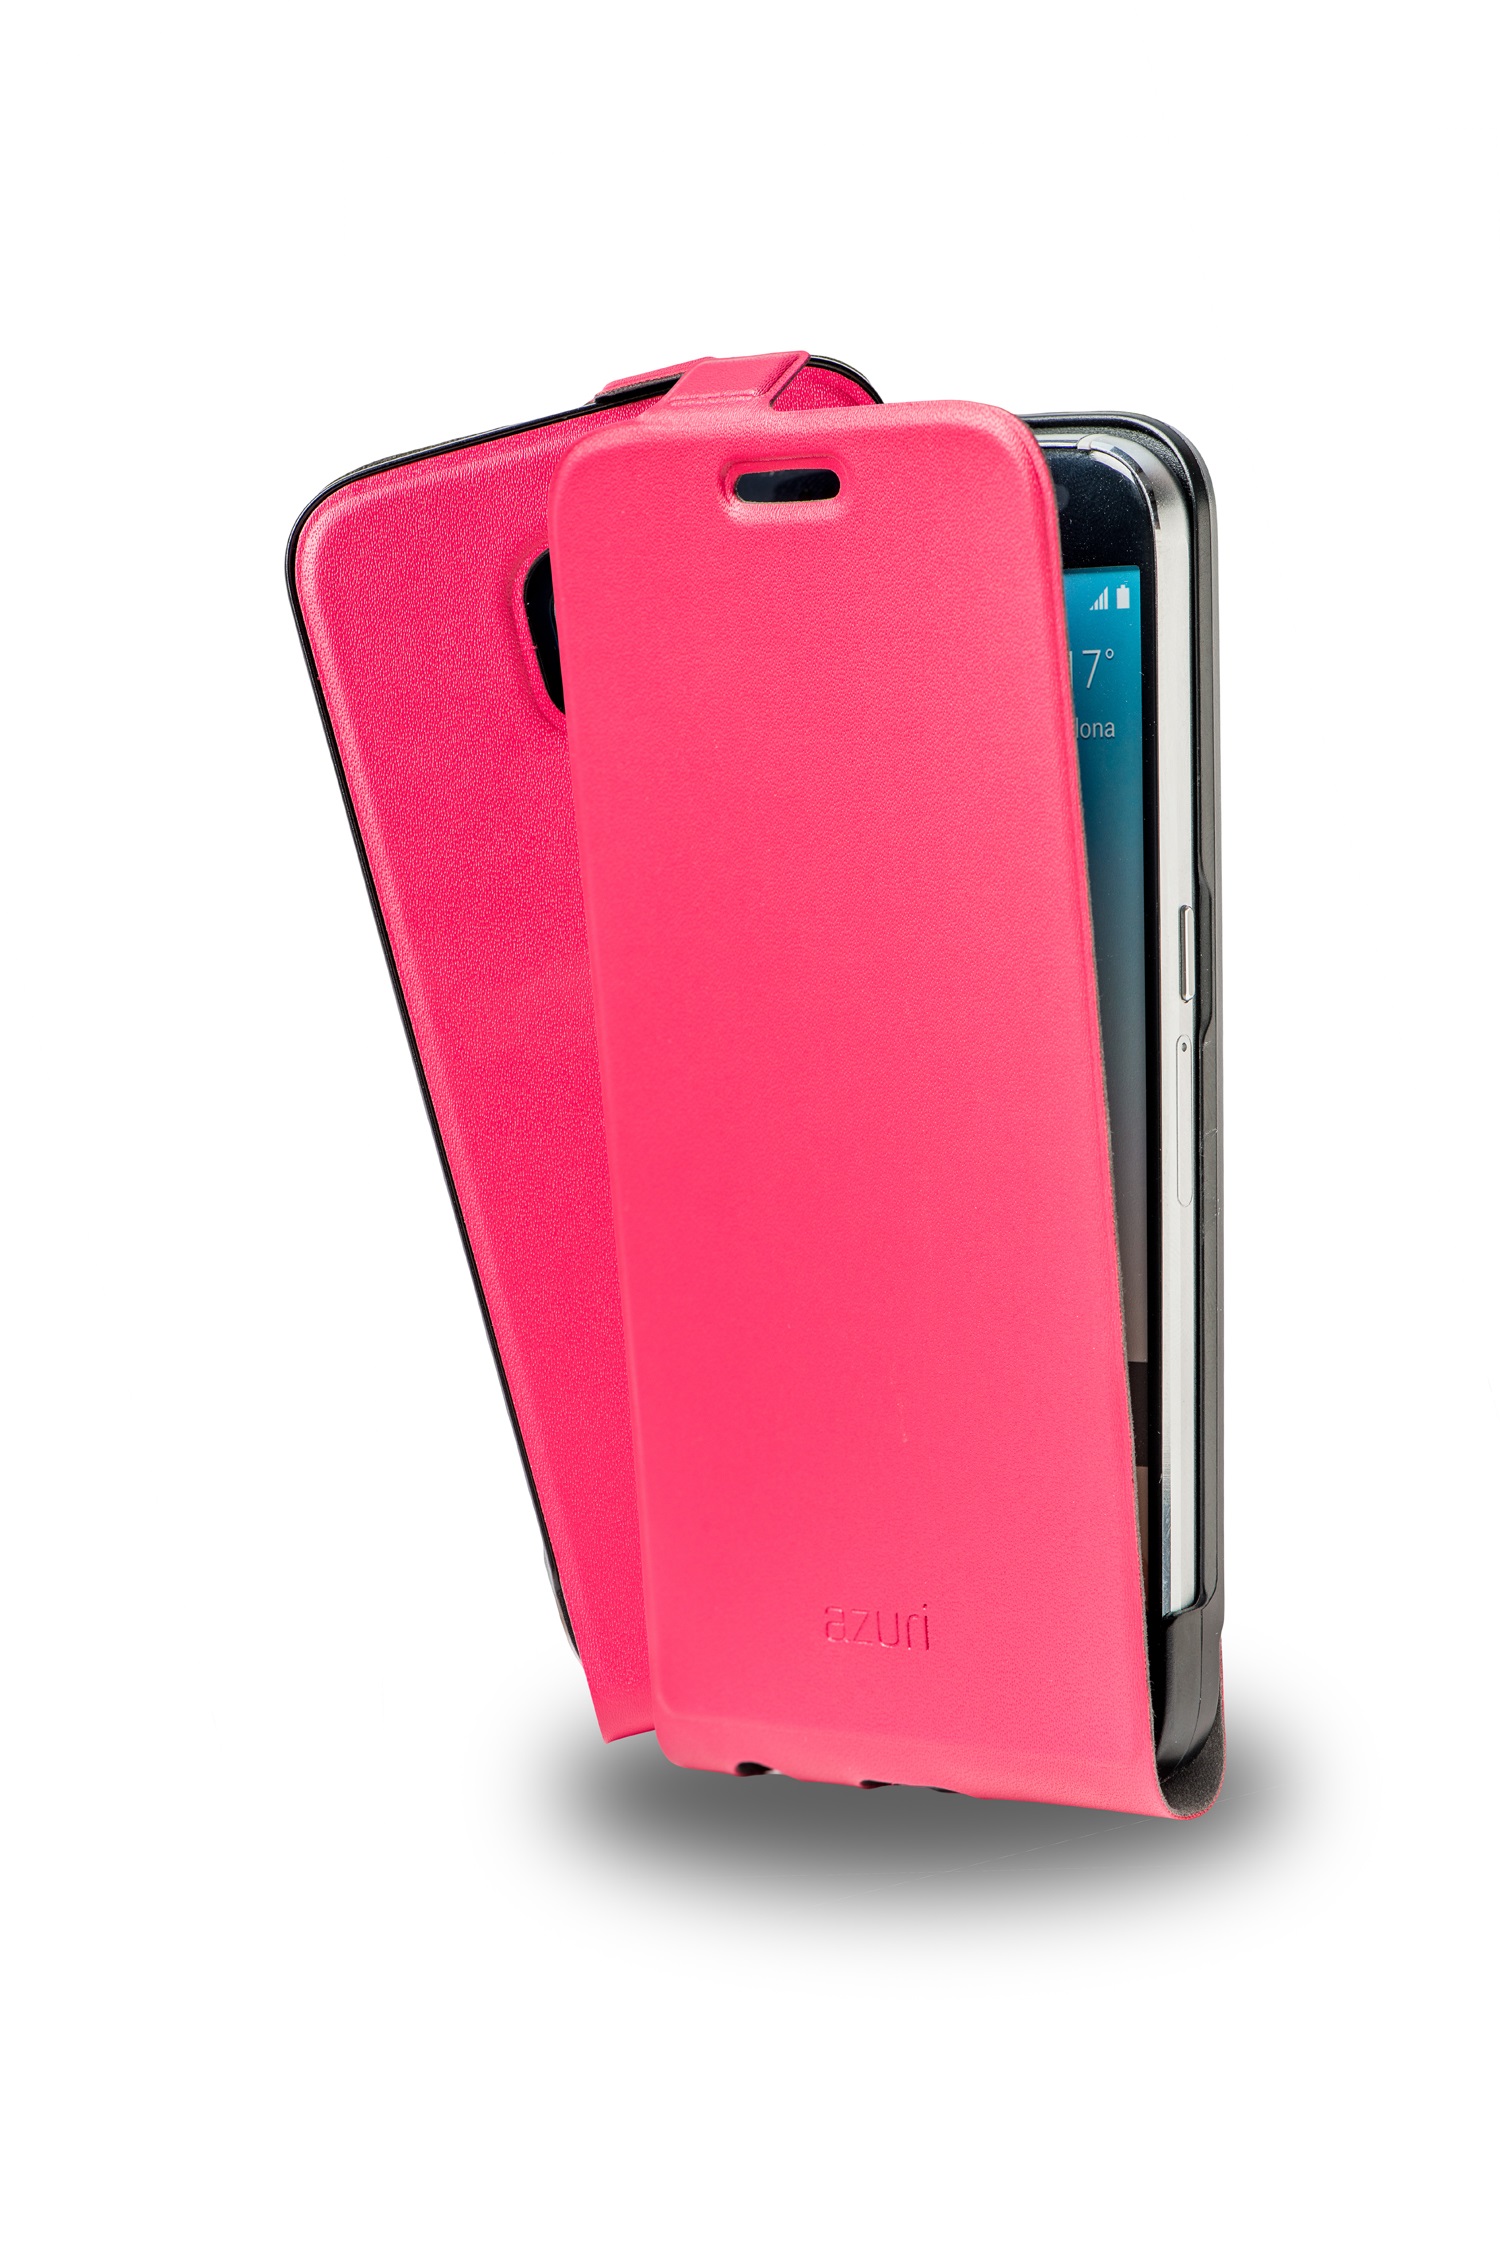 Image of Azuri Flip tasje met cardslot voor Samsung G920 Galaxy S6 - leder roze